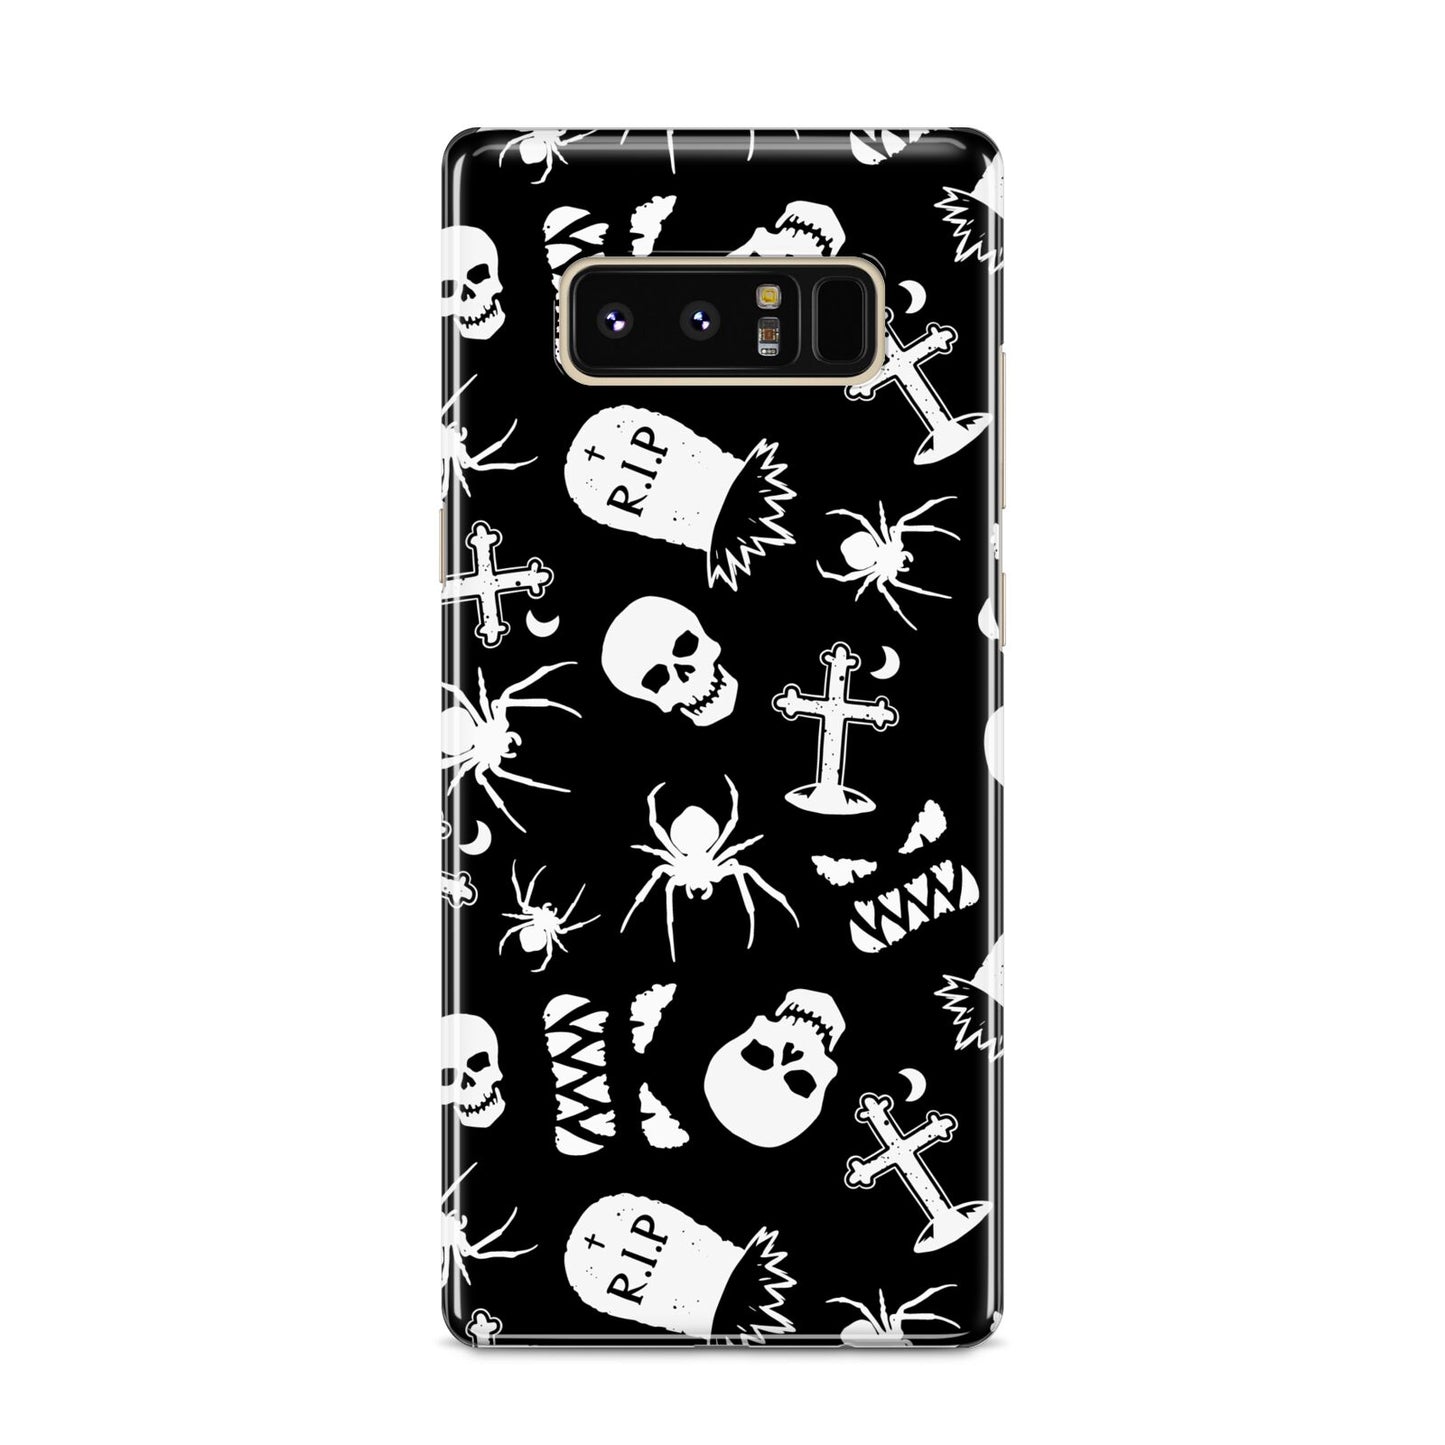 Spooky Illustrations Samsung Galaxy S8 Case